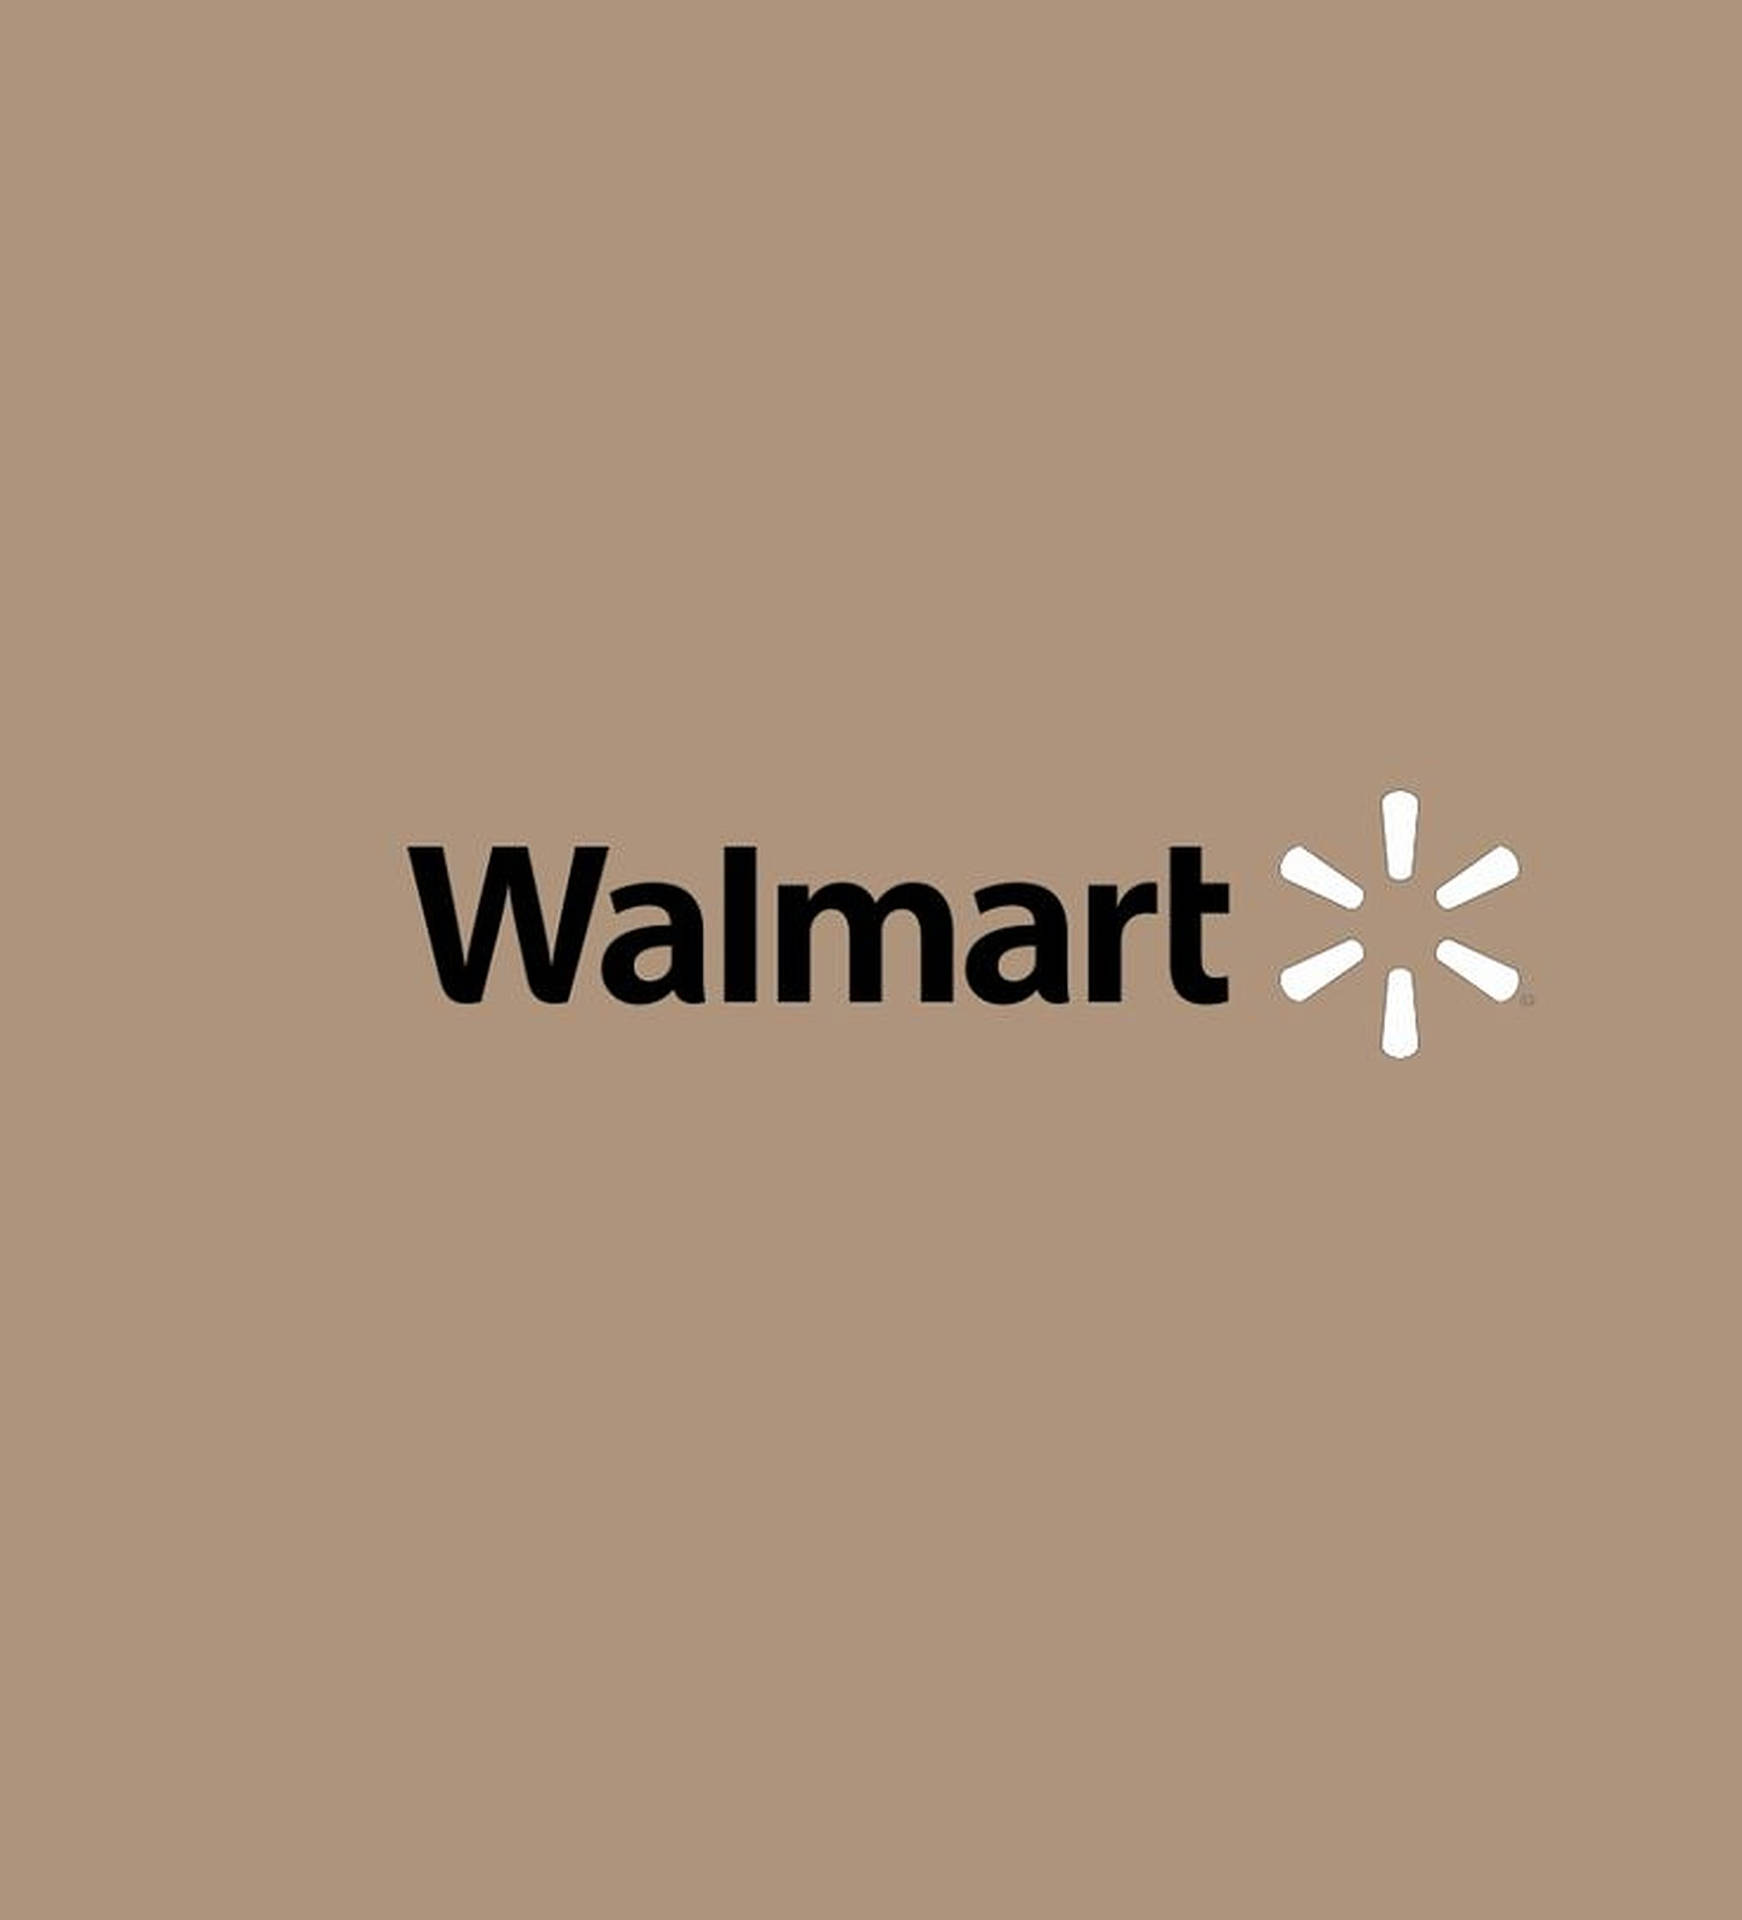 Logode Walmart En Color Beige Fondo de pantalla